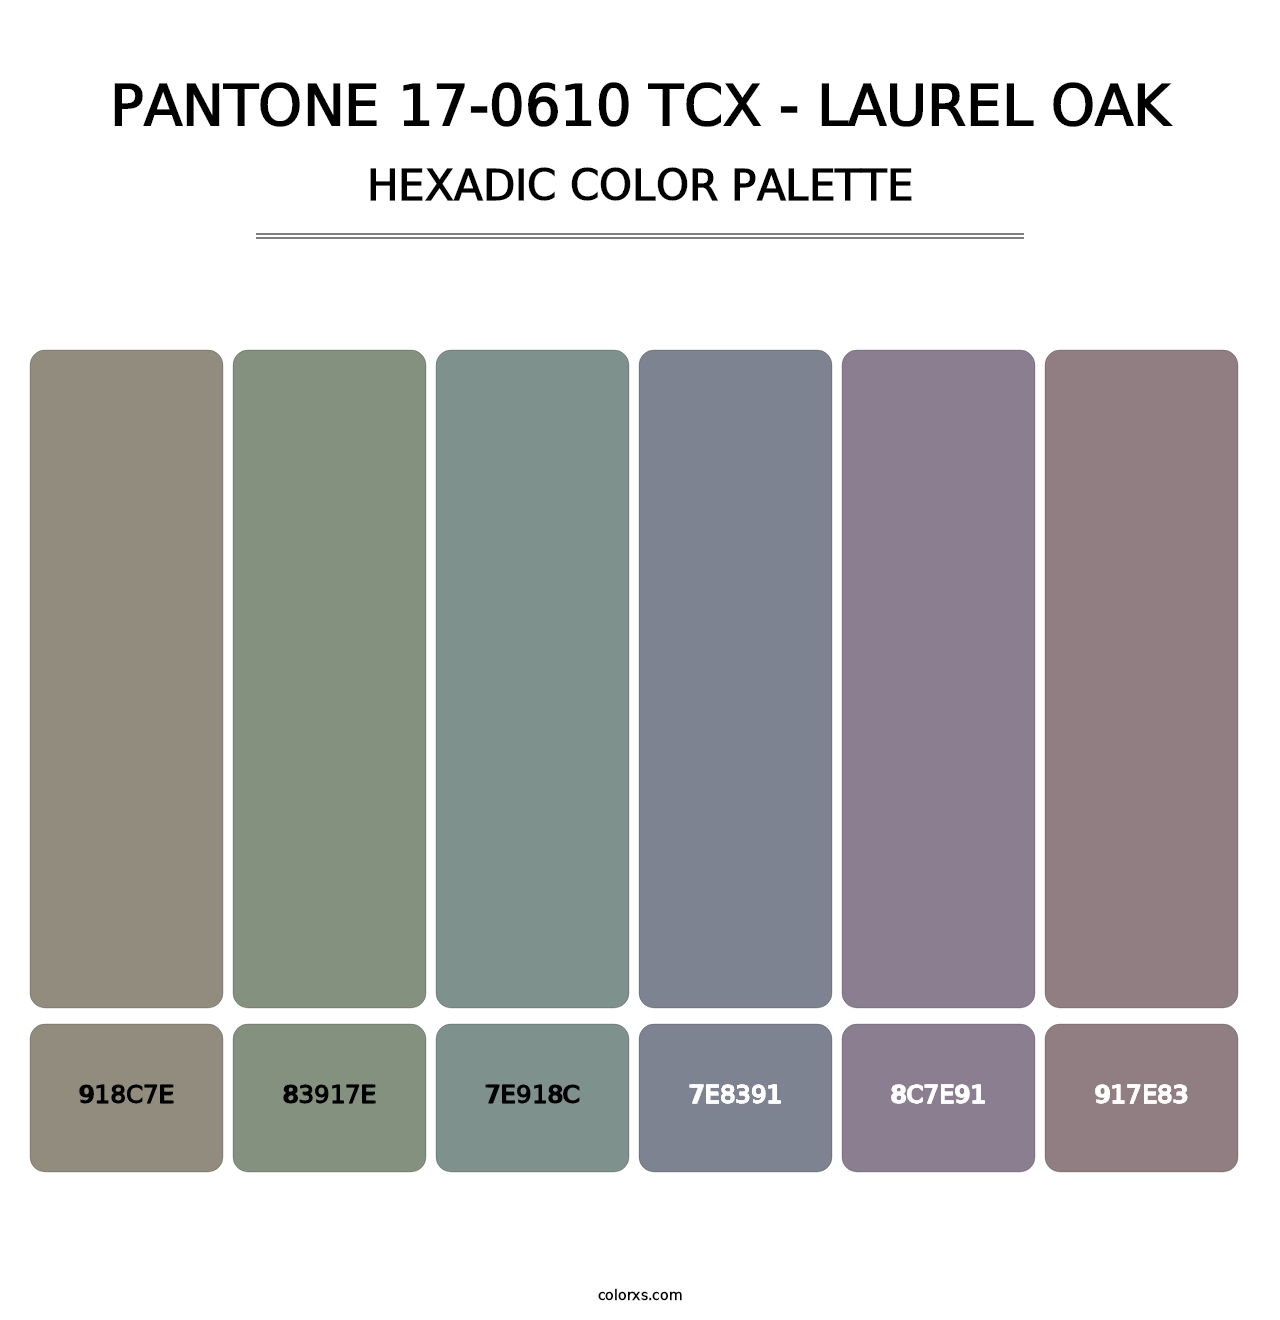 PANTONE 17-0610 TCX - Laurel Oak - Hexadic Color Palette